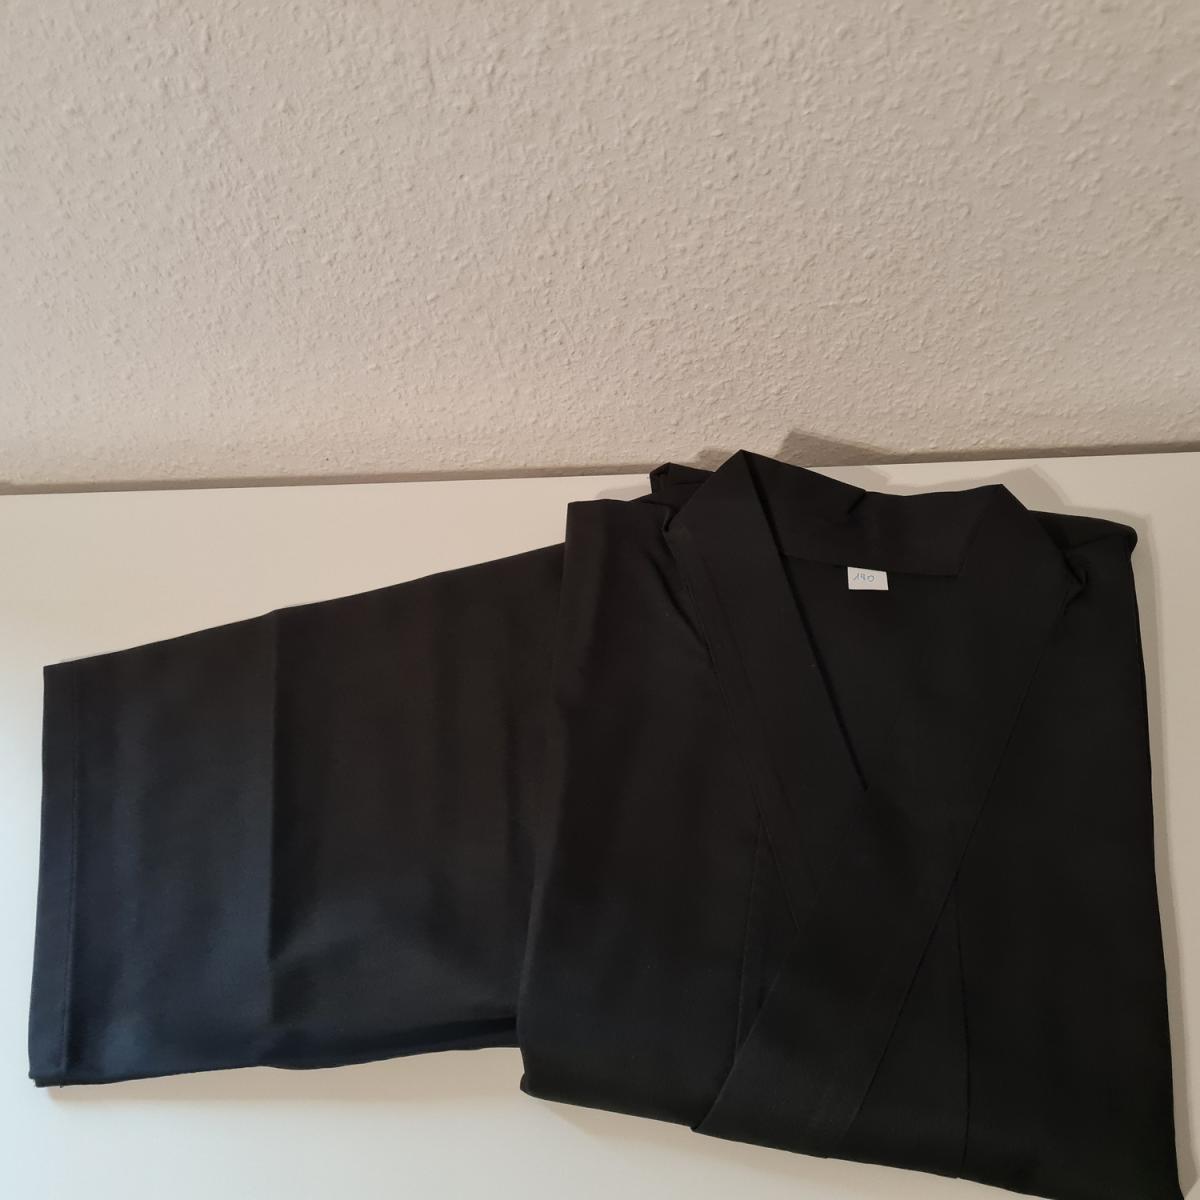 Gi made of cotton - fabric color black - size 165 cm ➤ www.bokken-shop.de. Gi suitable for Iaido, Aikdo, Kendo, Jodo. Your Budo dealer!